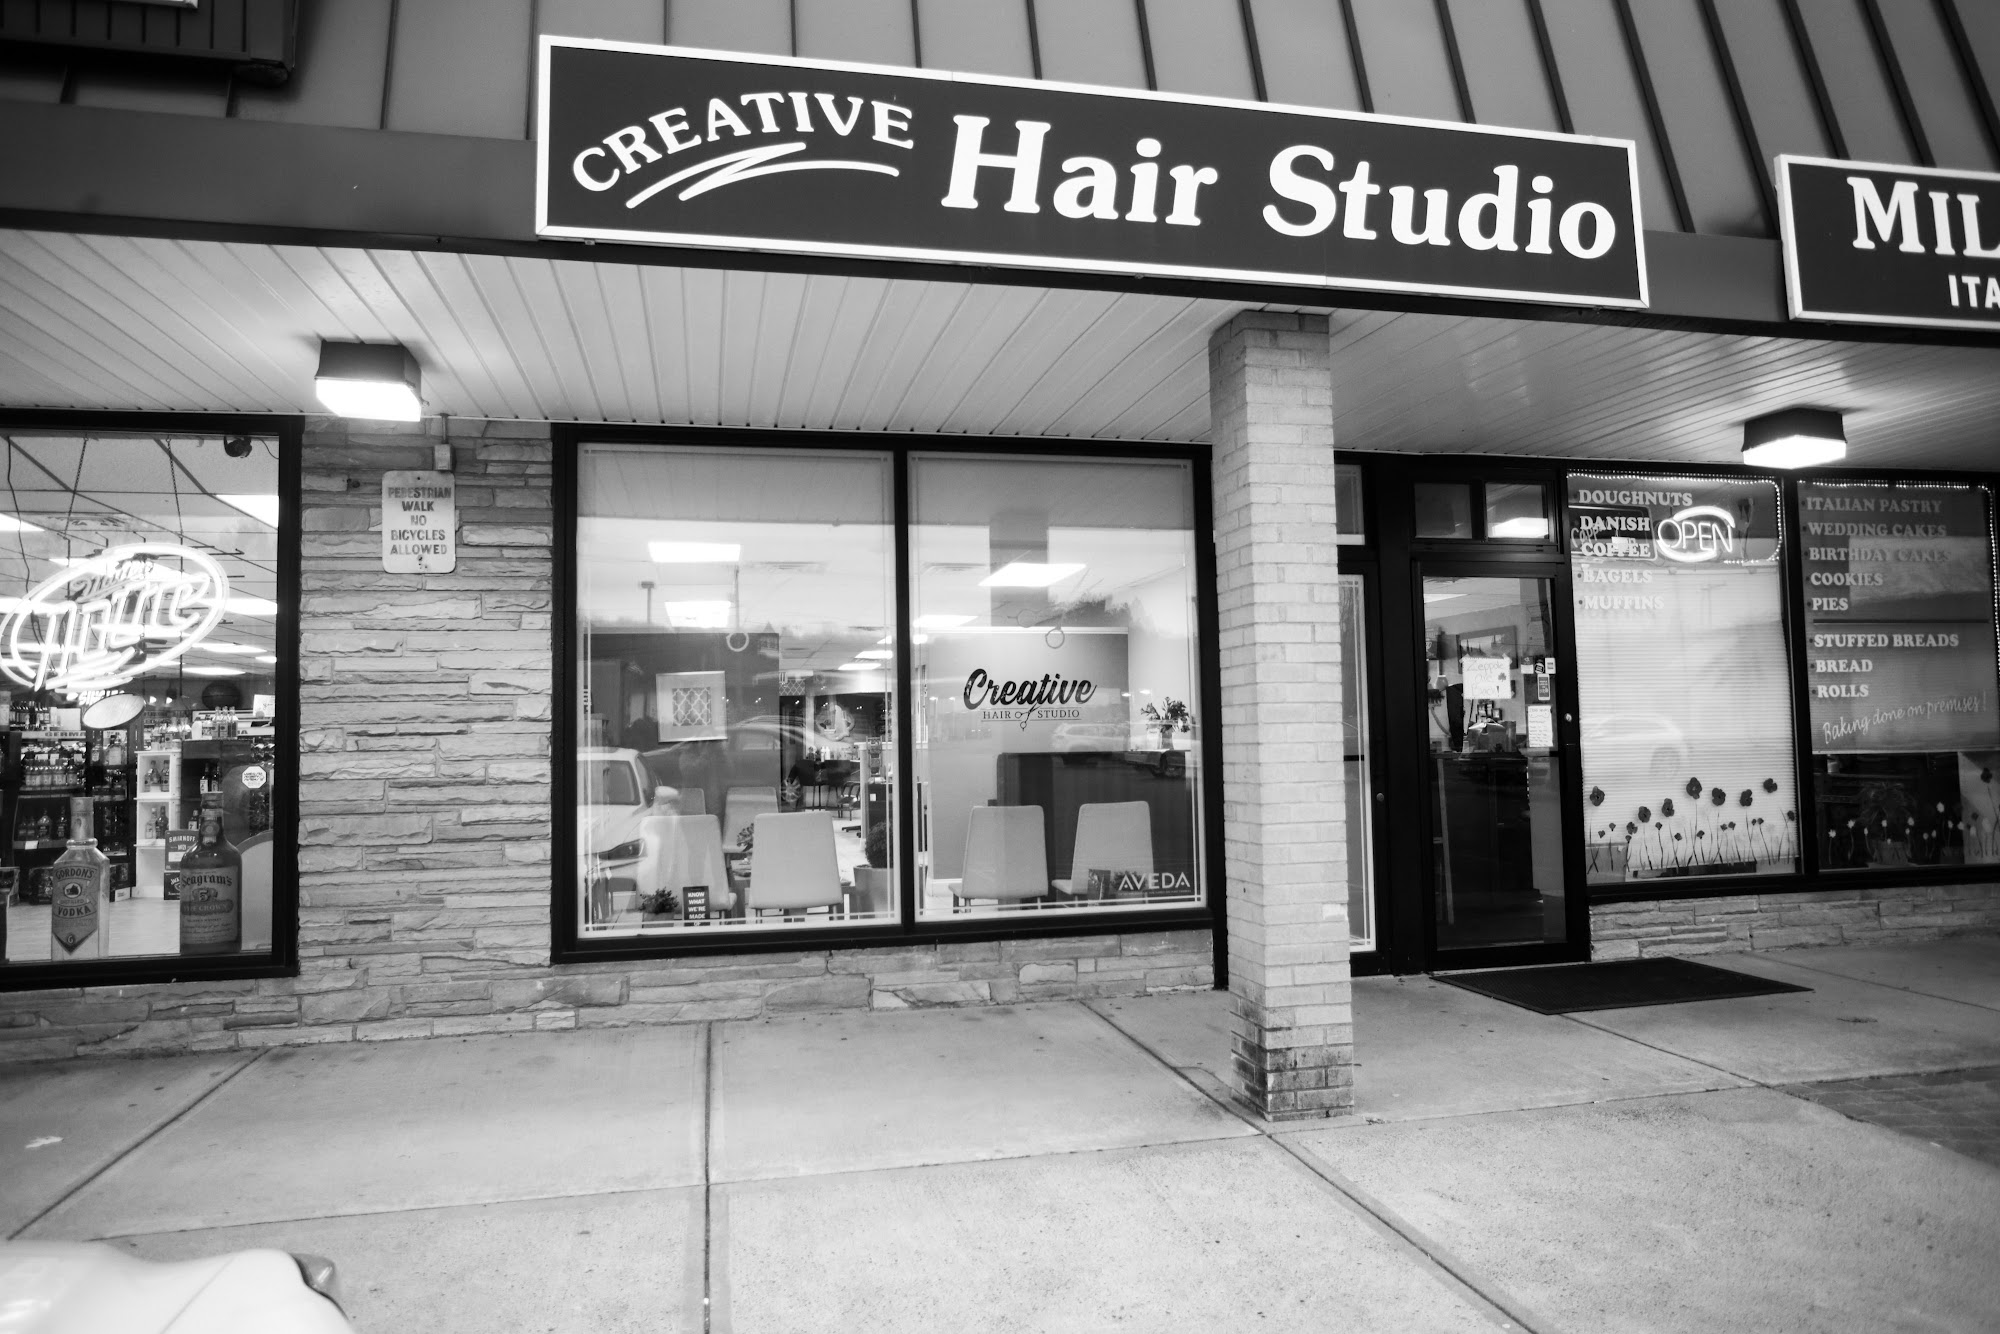 Creative Hair Studio 855 Forest Rd, Northford Connecticut 06472